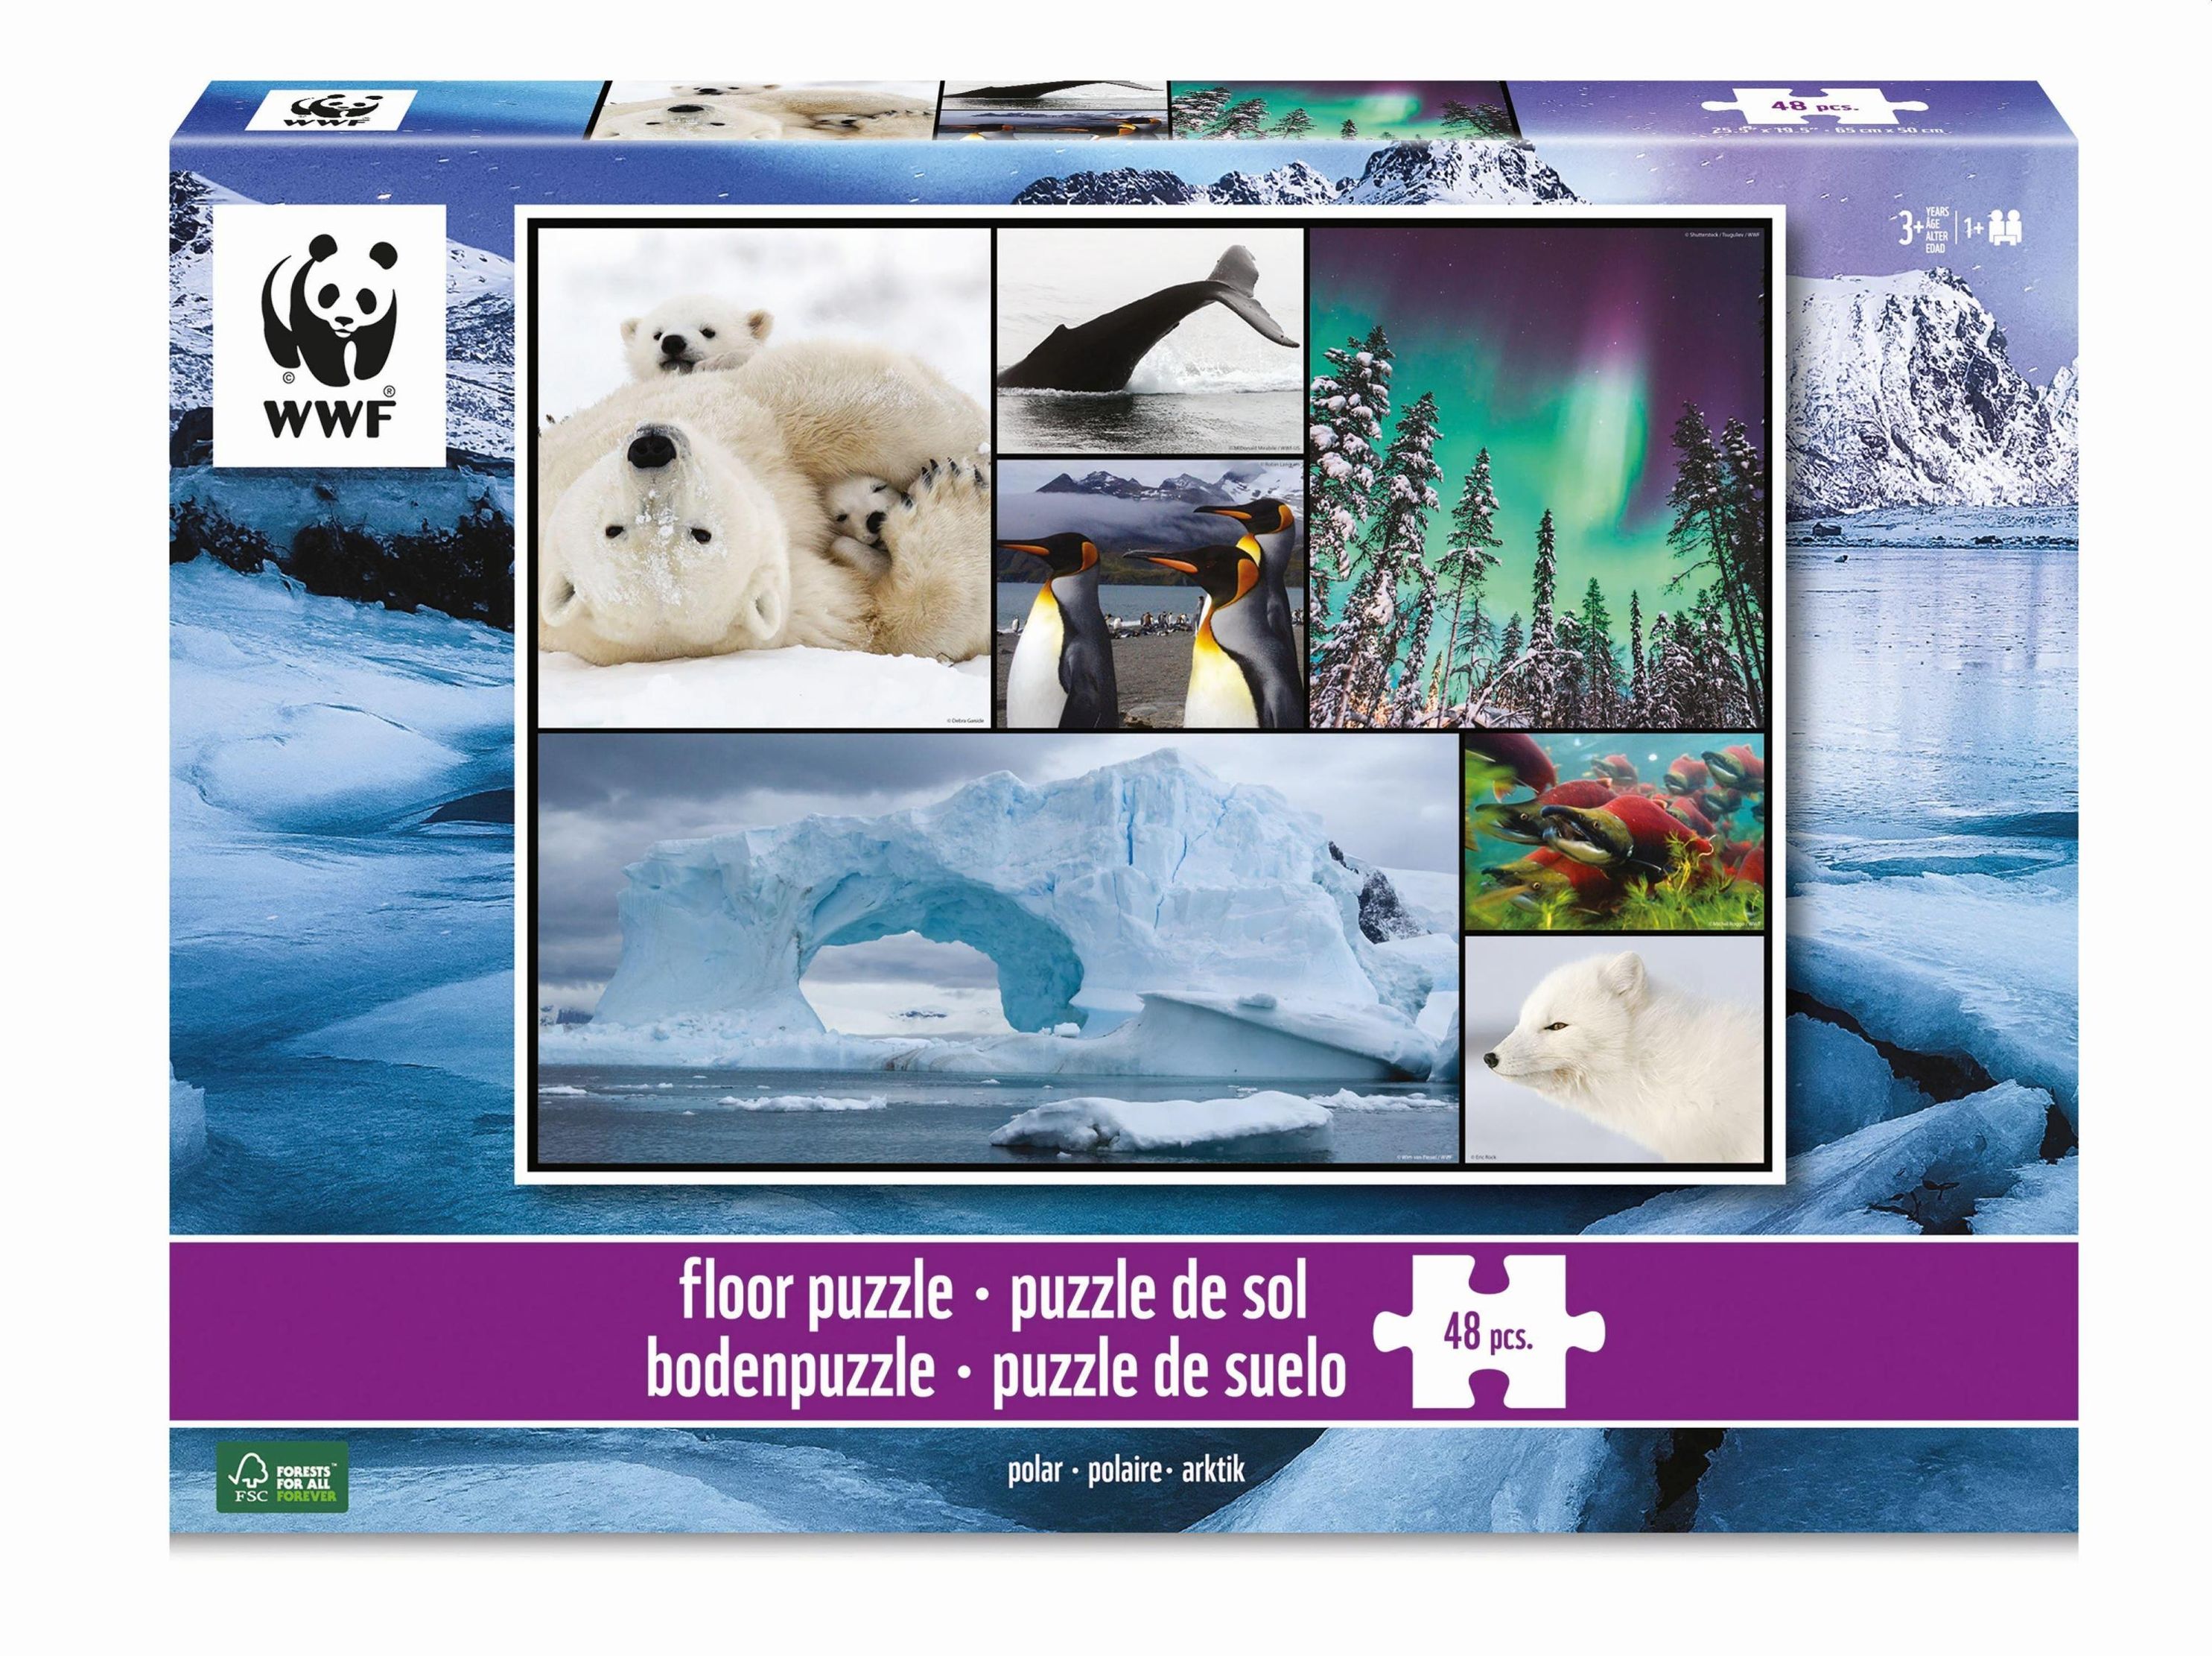 Bodenpuzzle Polar 48 Teile Puzzle jetzt bei Weltbild.de bestellen